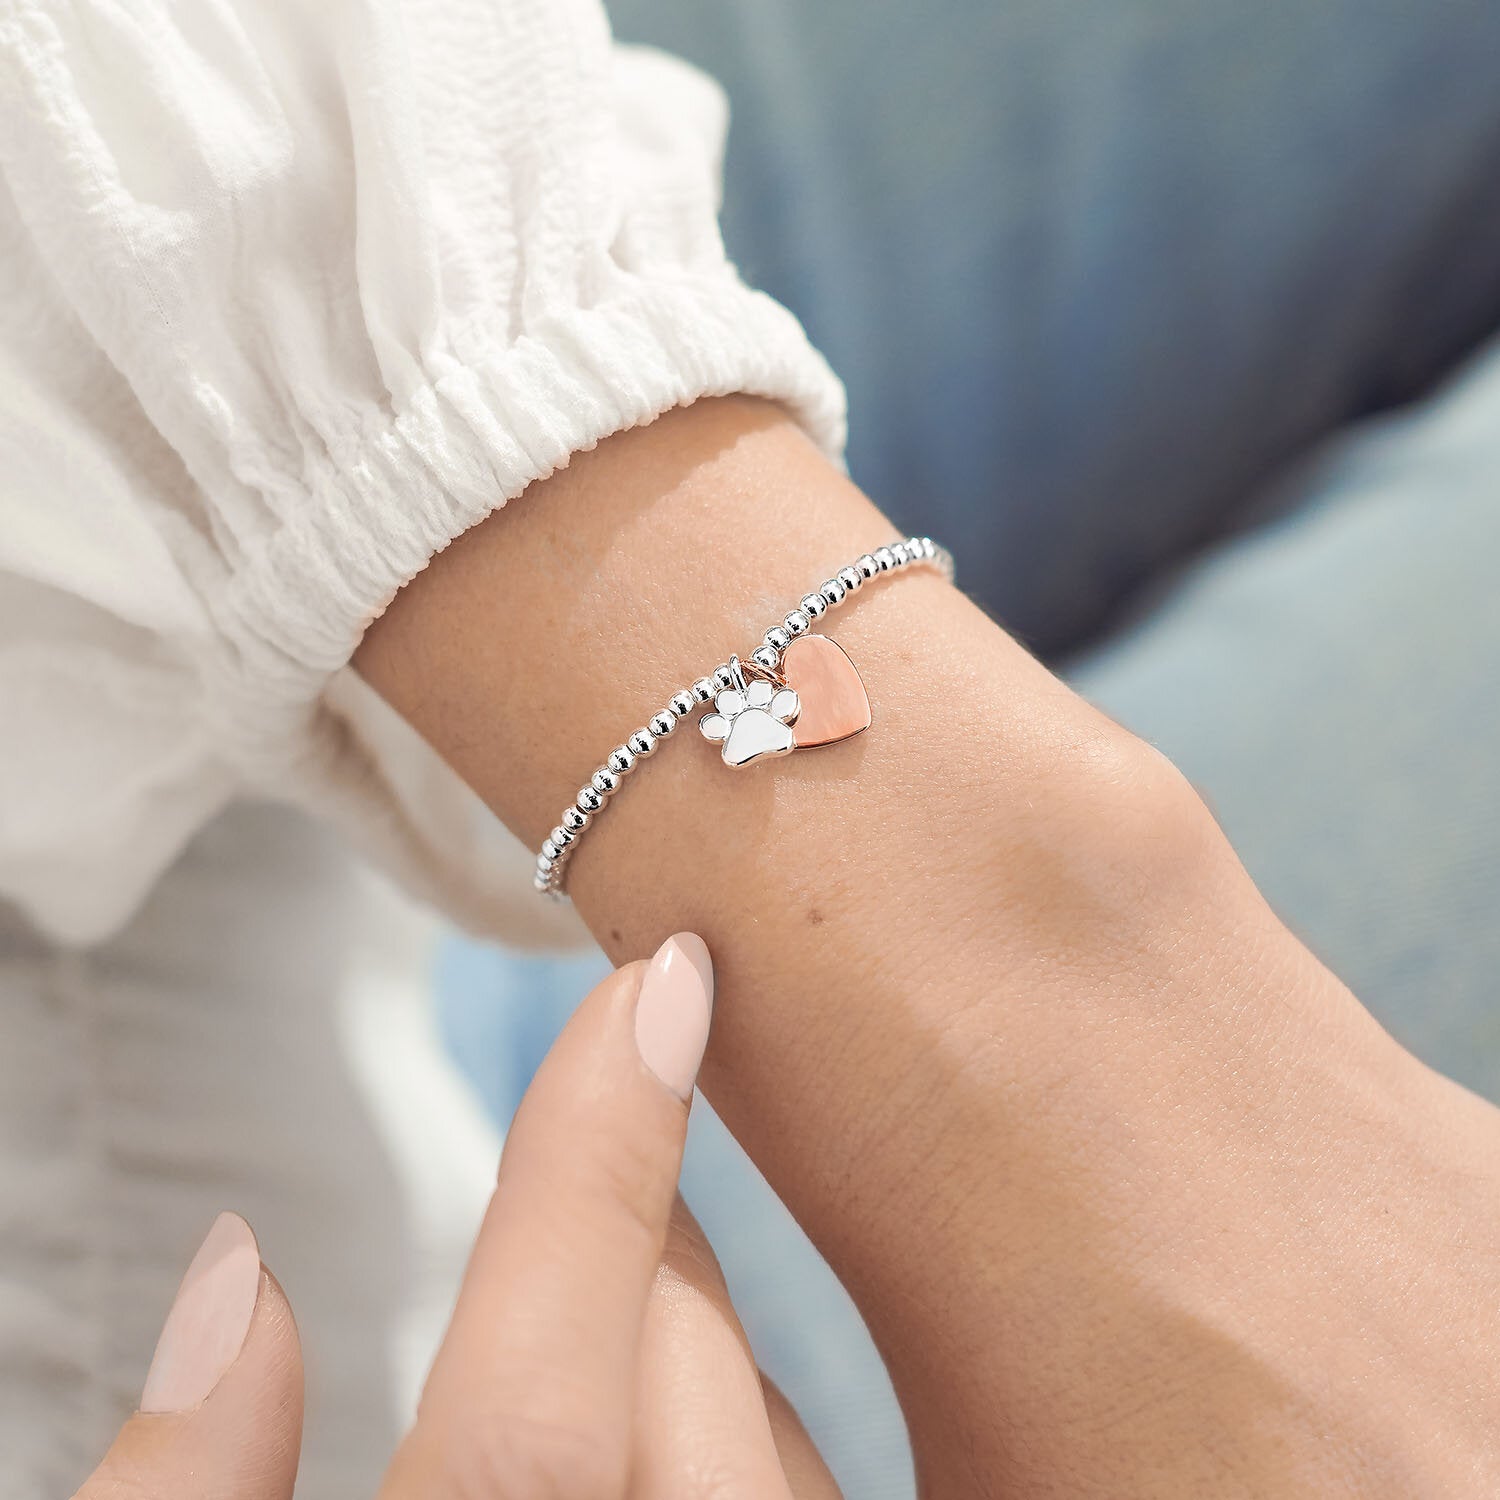 Joma Jewellery A Little 'Puppy Love' Bracelet